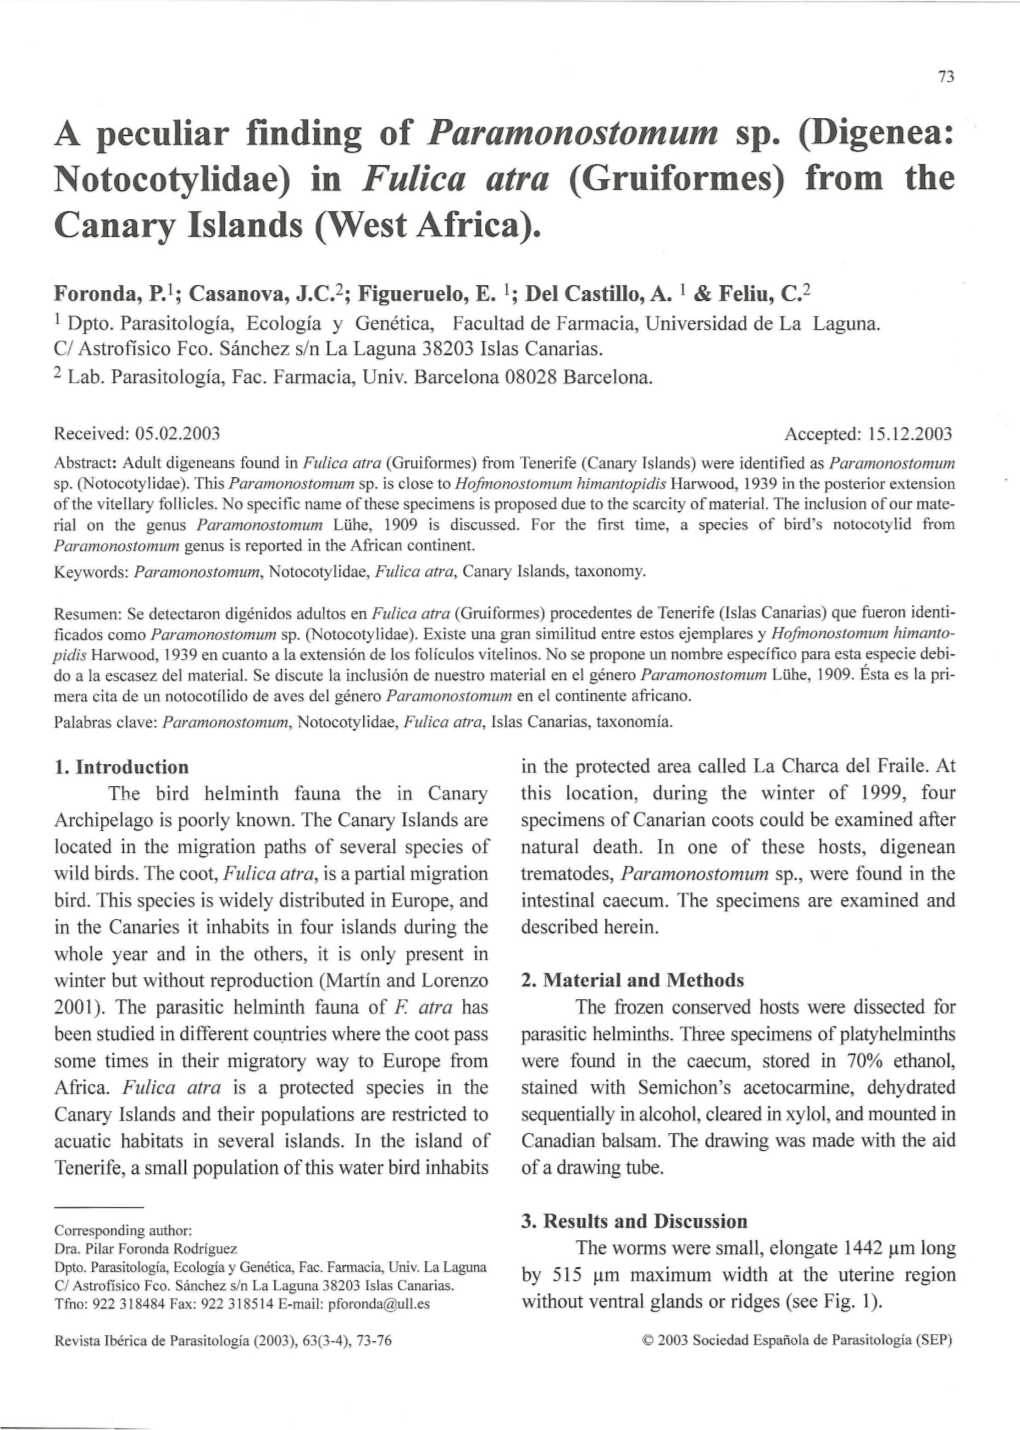 Digenea: Notocotylidae) in Fu/Iea Atra (Gruiformes) from the Canary Islands (West Africa)